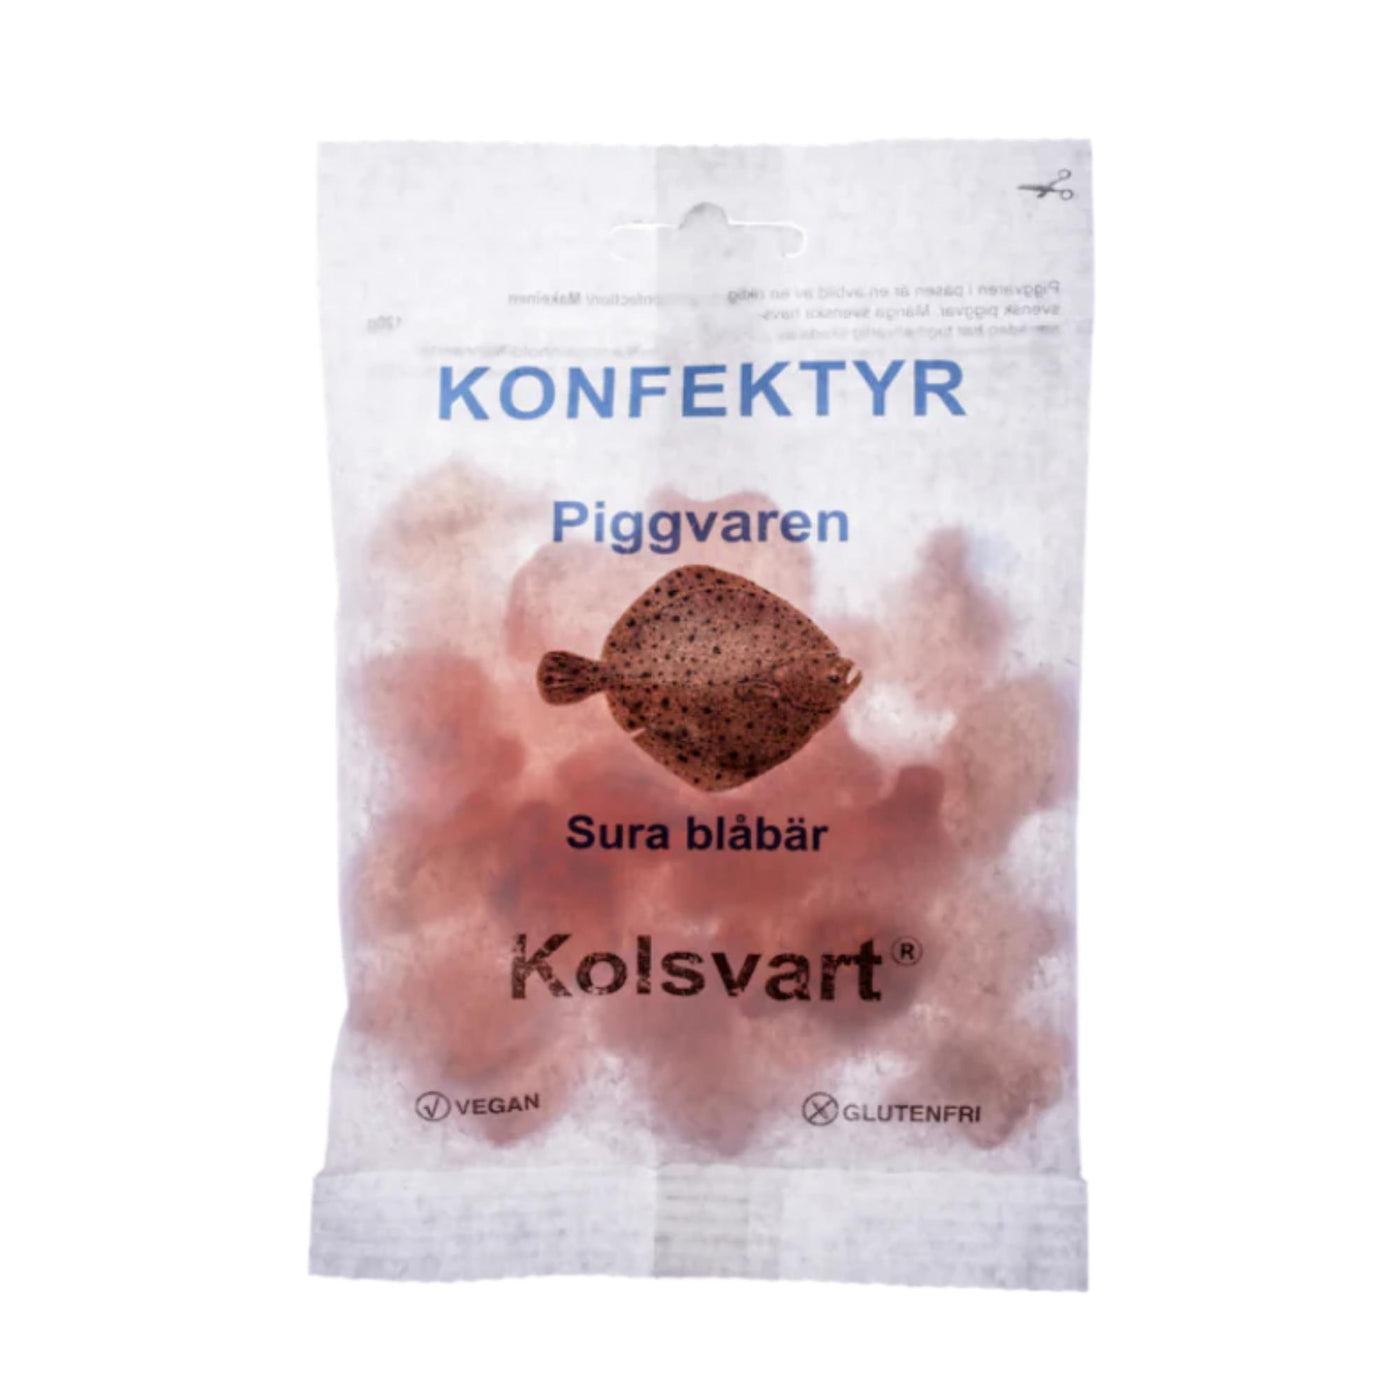 Kolsvart Lakrits Piggvaren – Swedish Vegan Sour Blueberry Gums